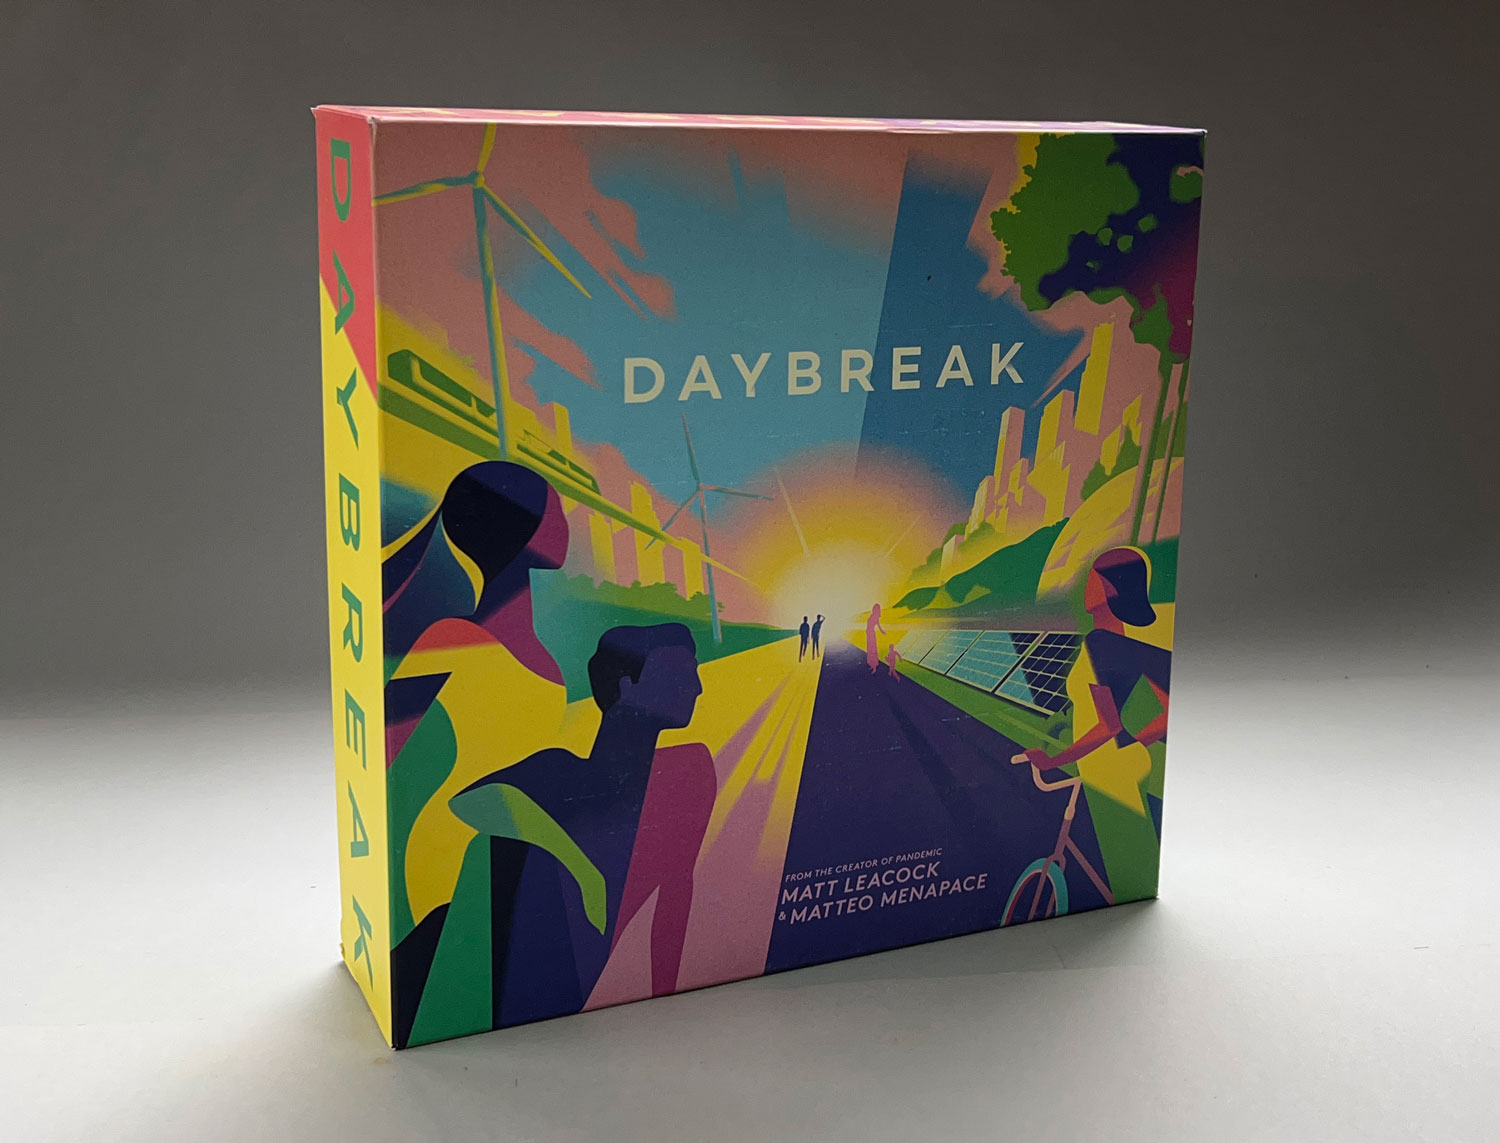 Daybreak: The box